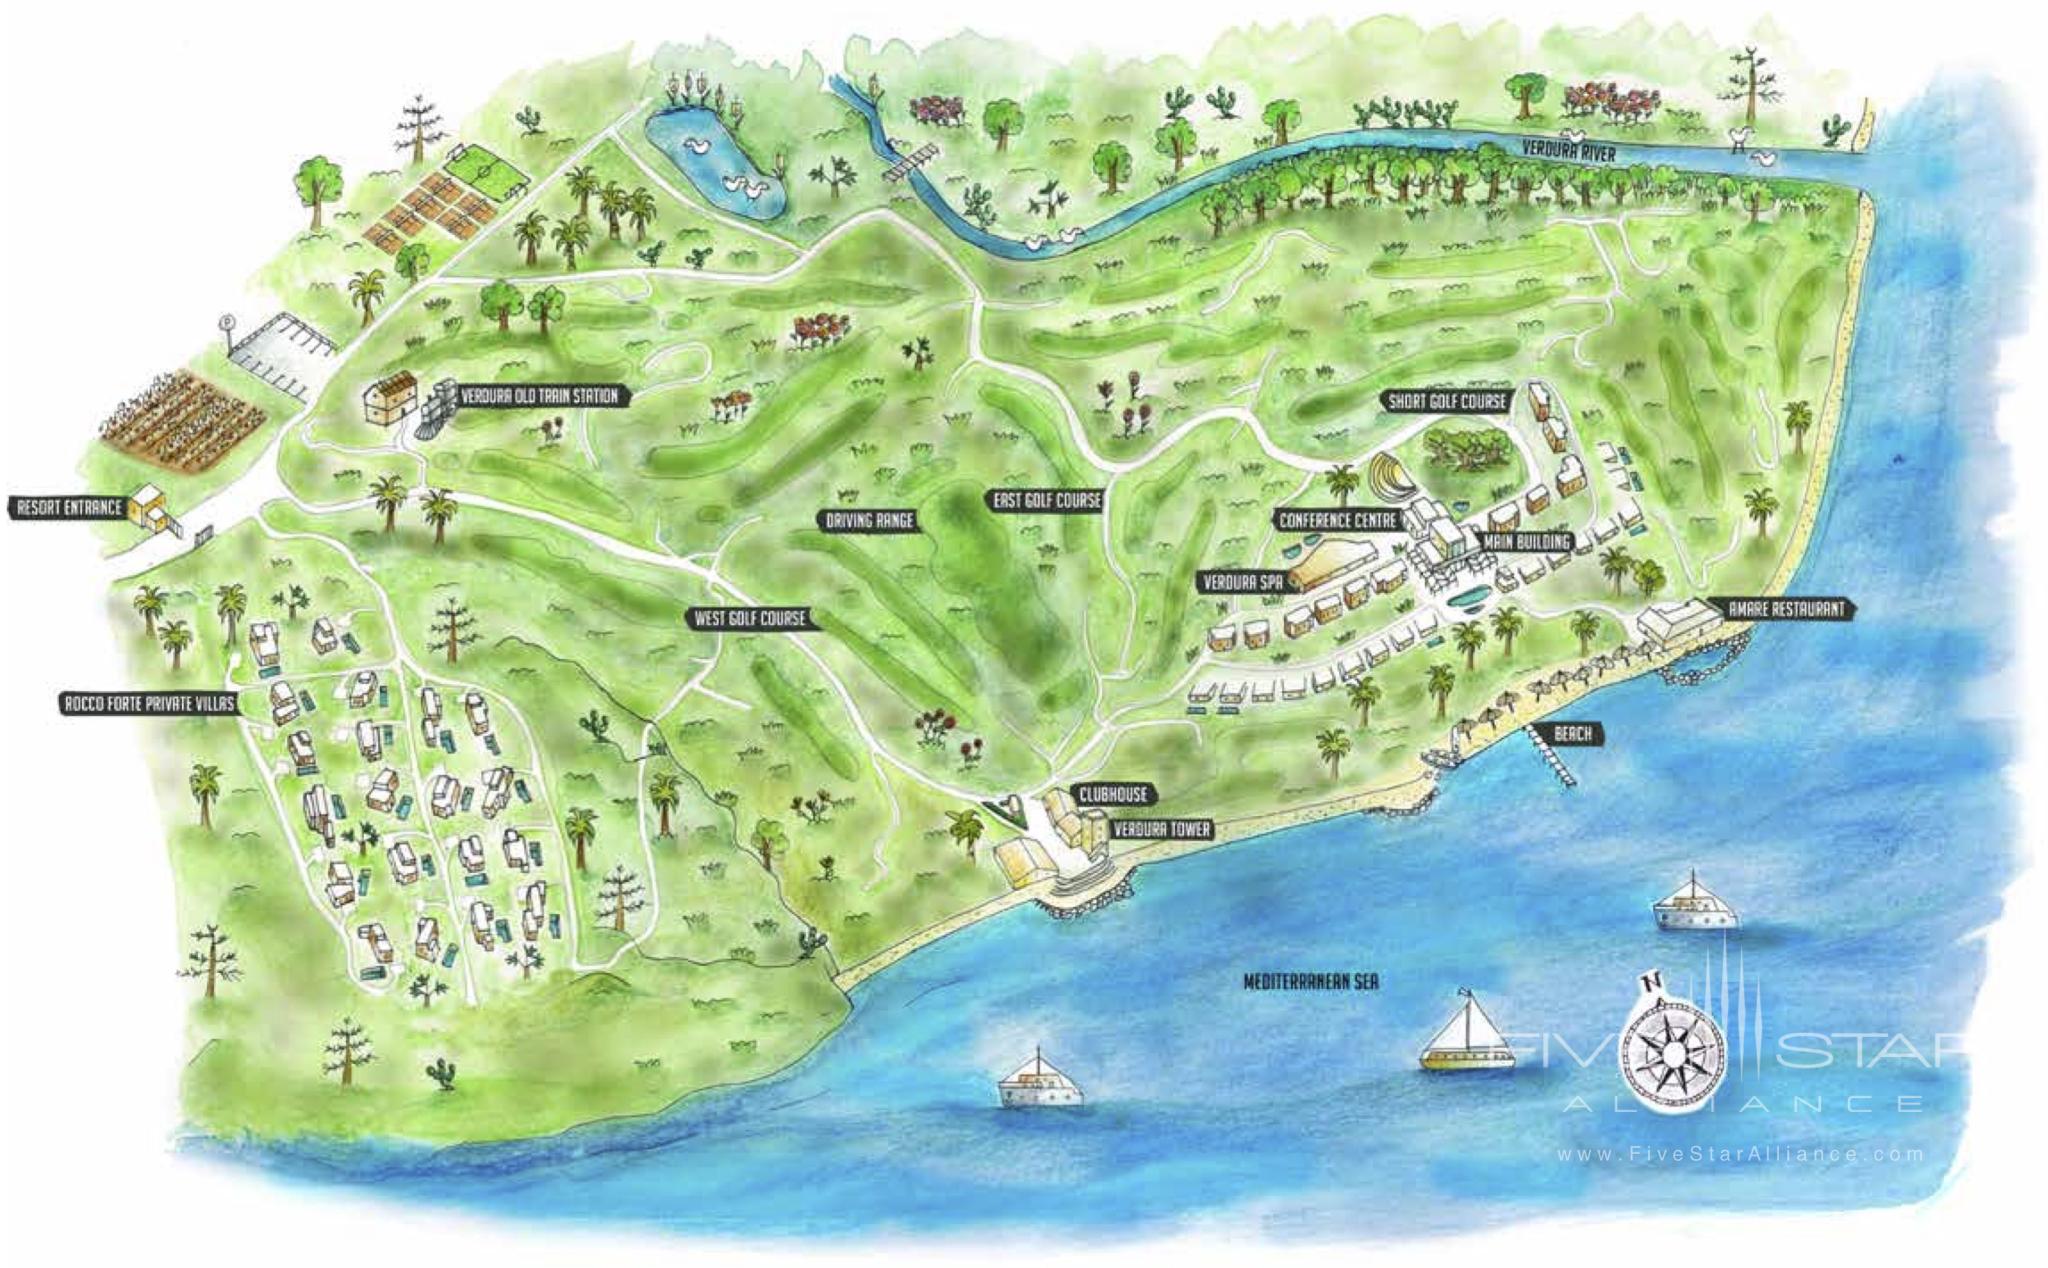 The Verdura Golf and Spa Resort